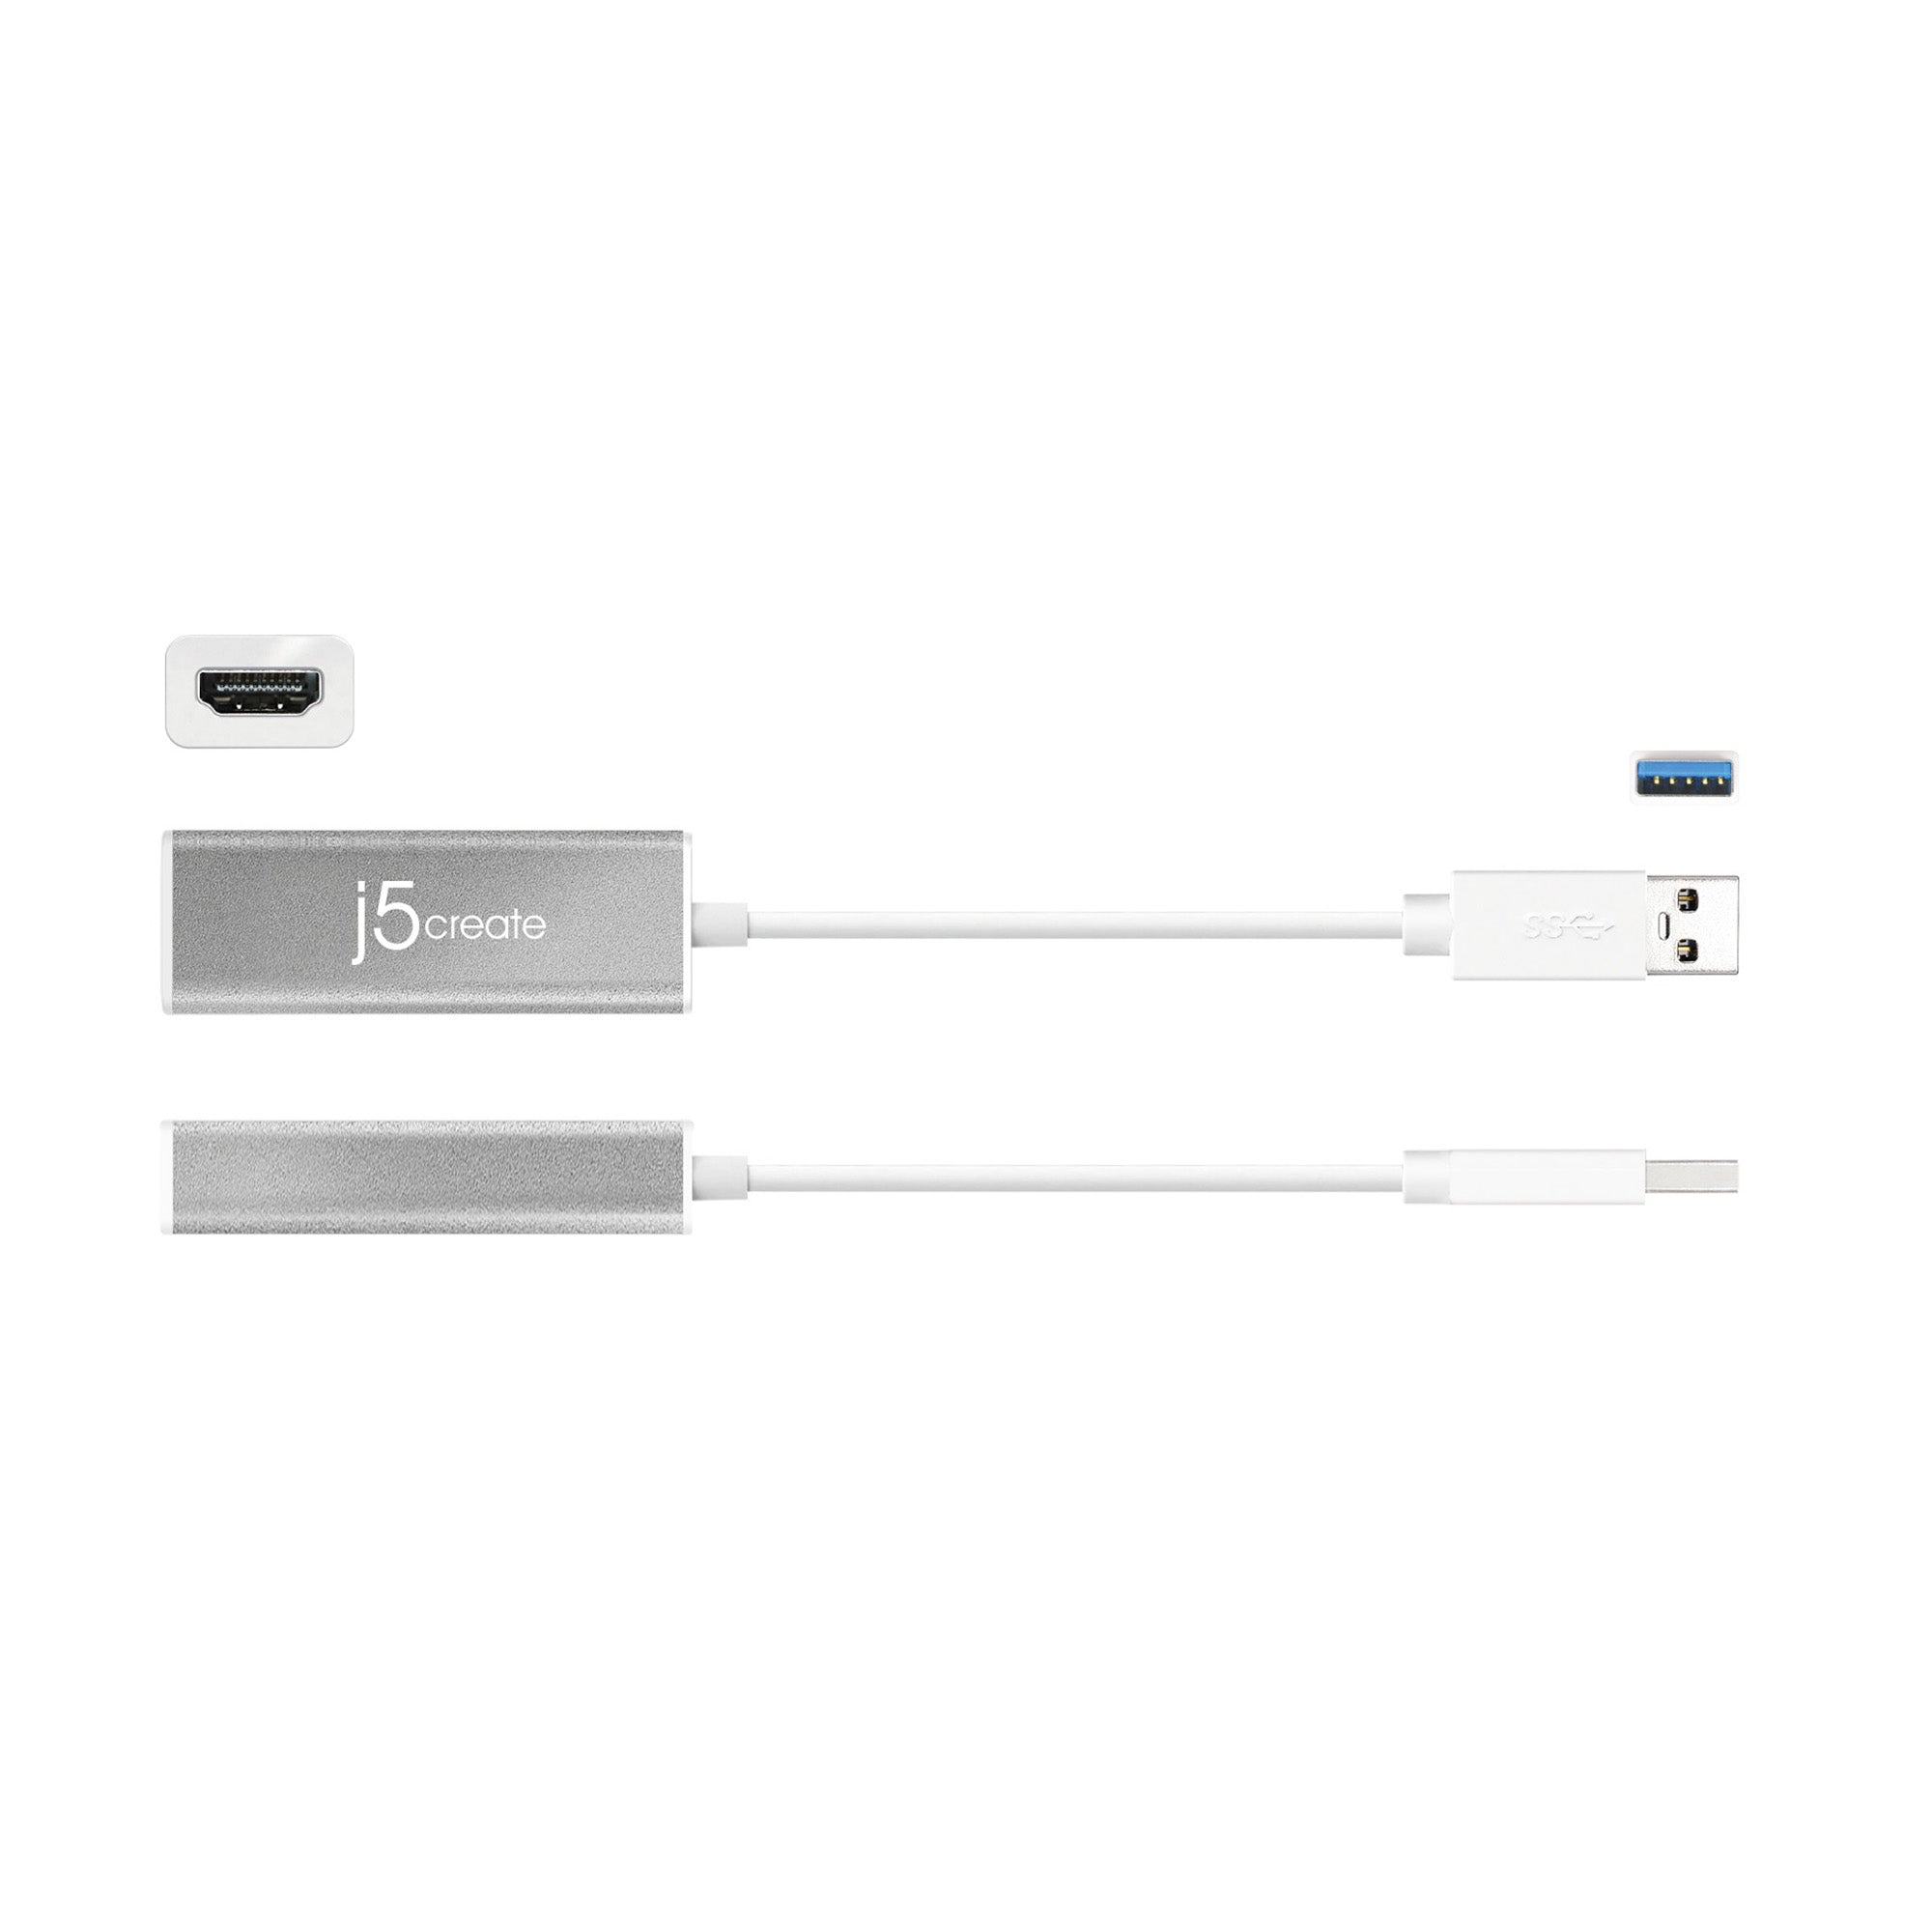 JUA355 USB 3.0 to HDMI スリムディスプレイアダプター – new-jp-j5create